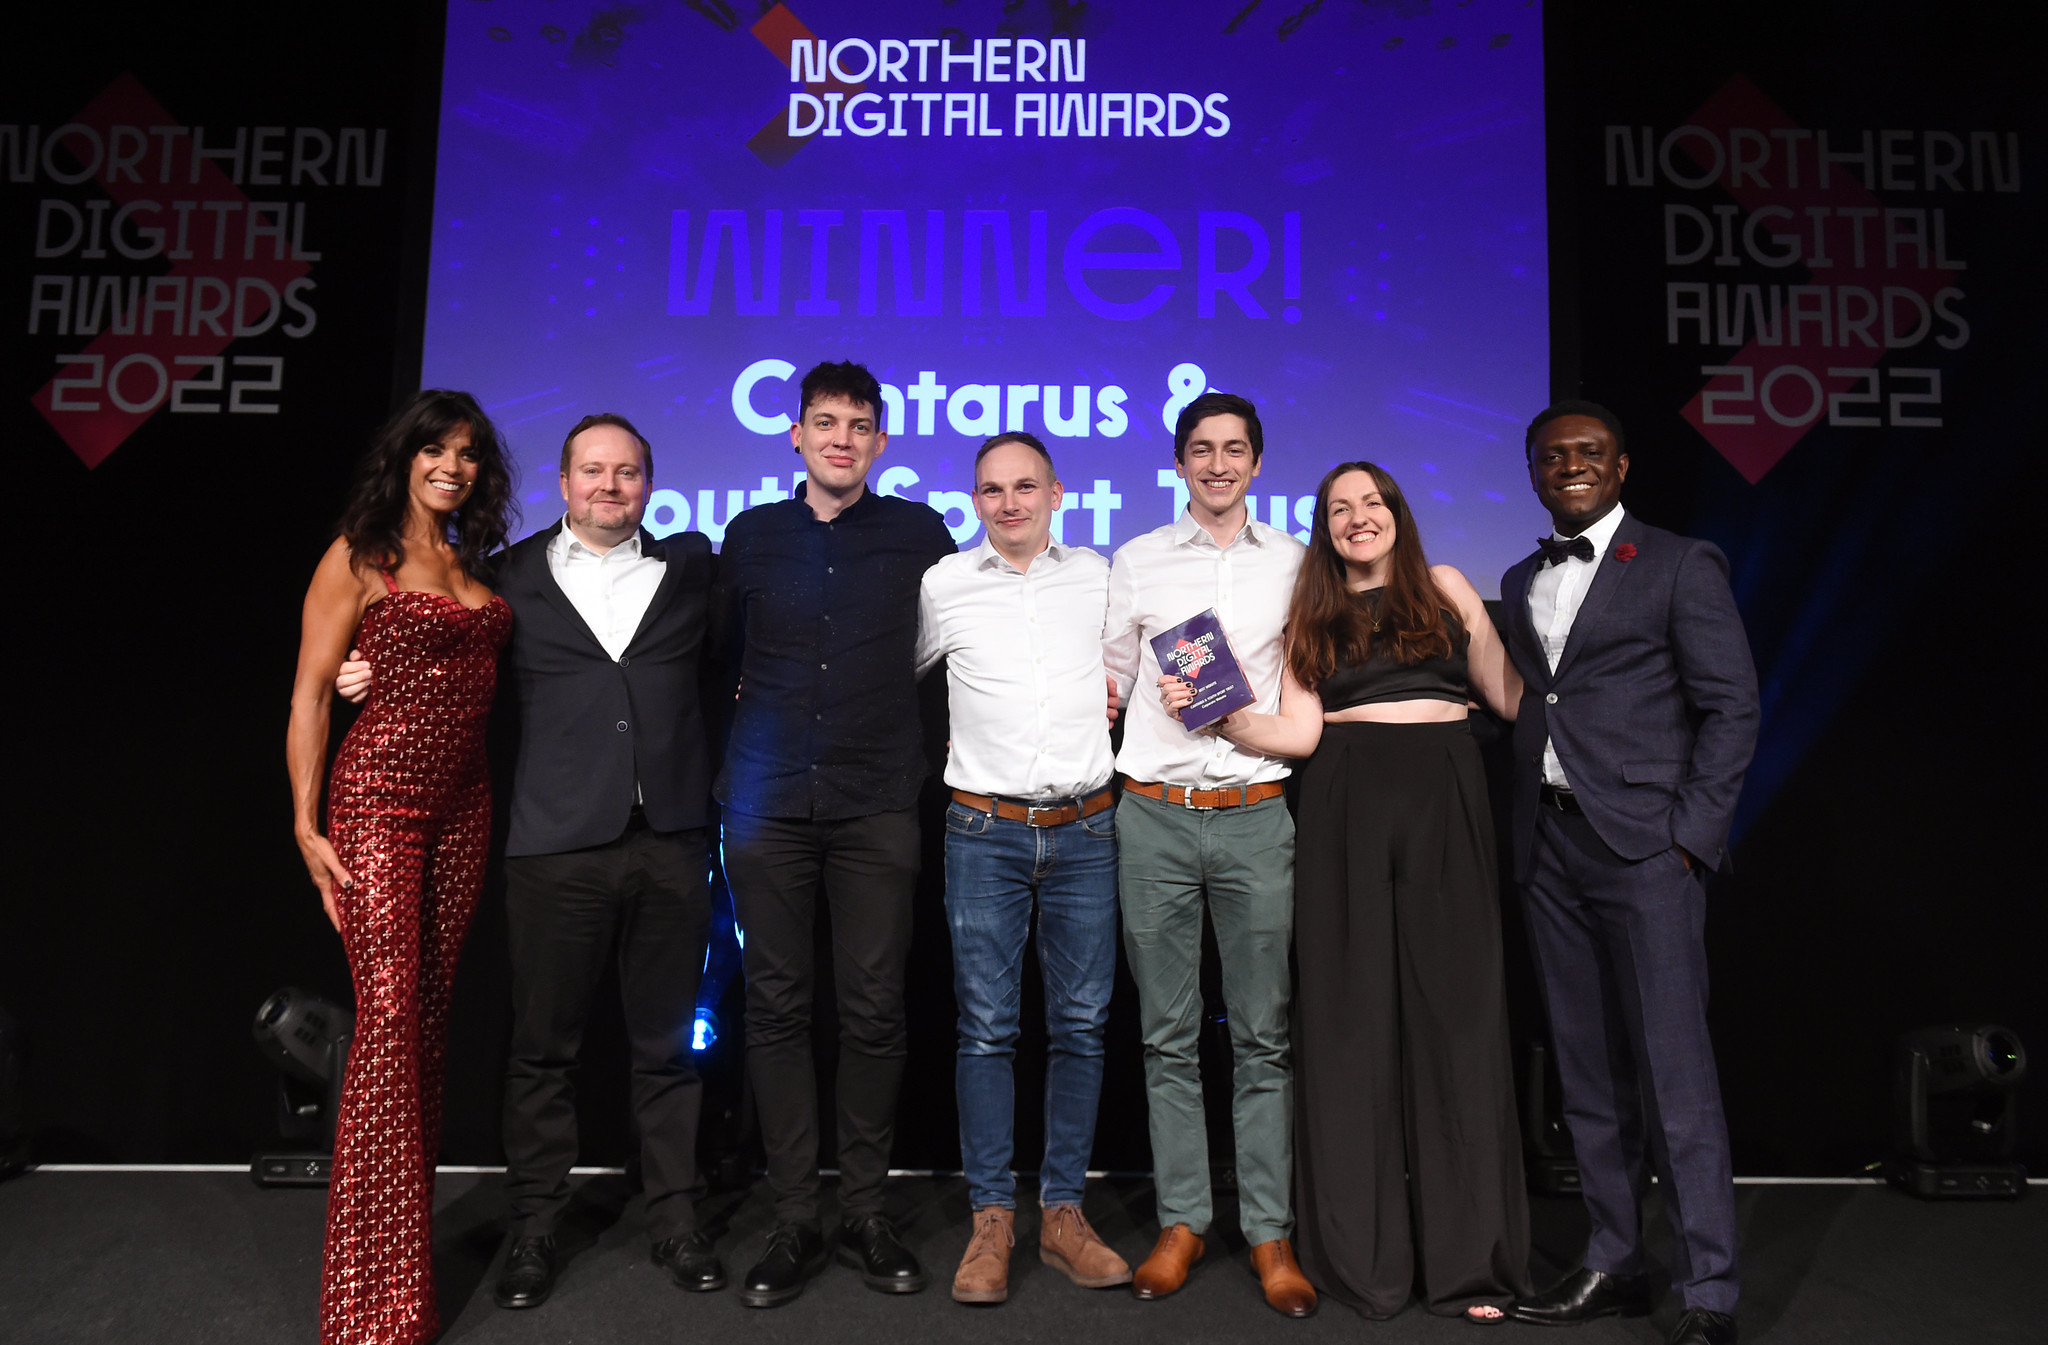 Cantarus team wins Northern Digital Award